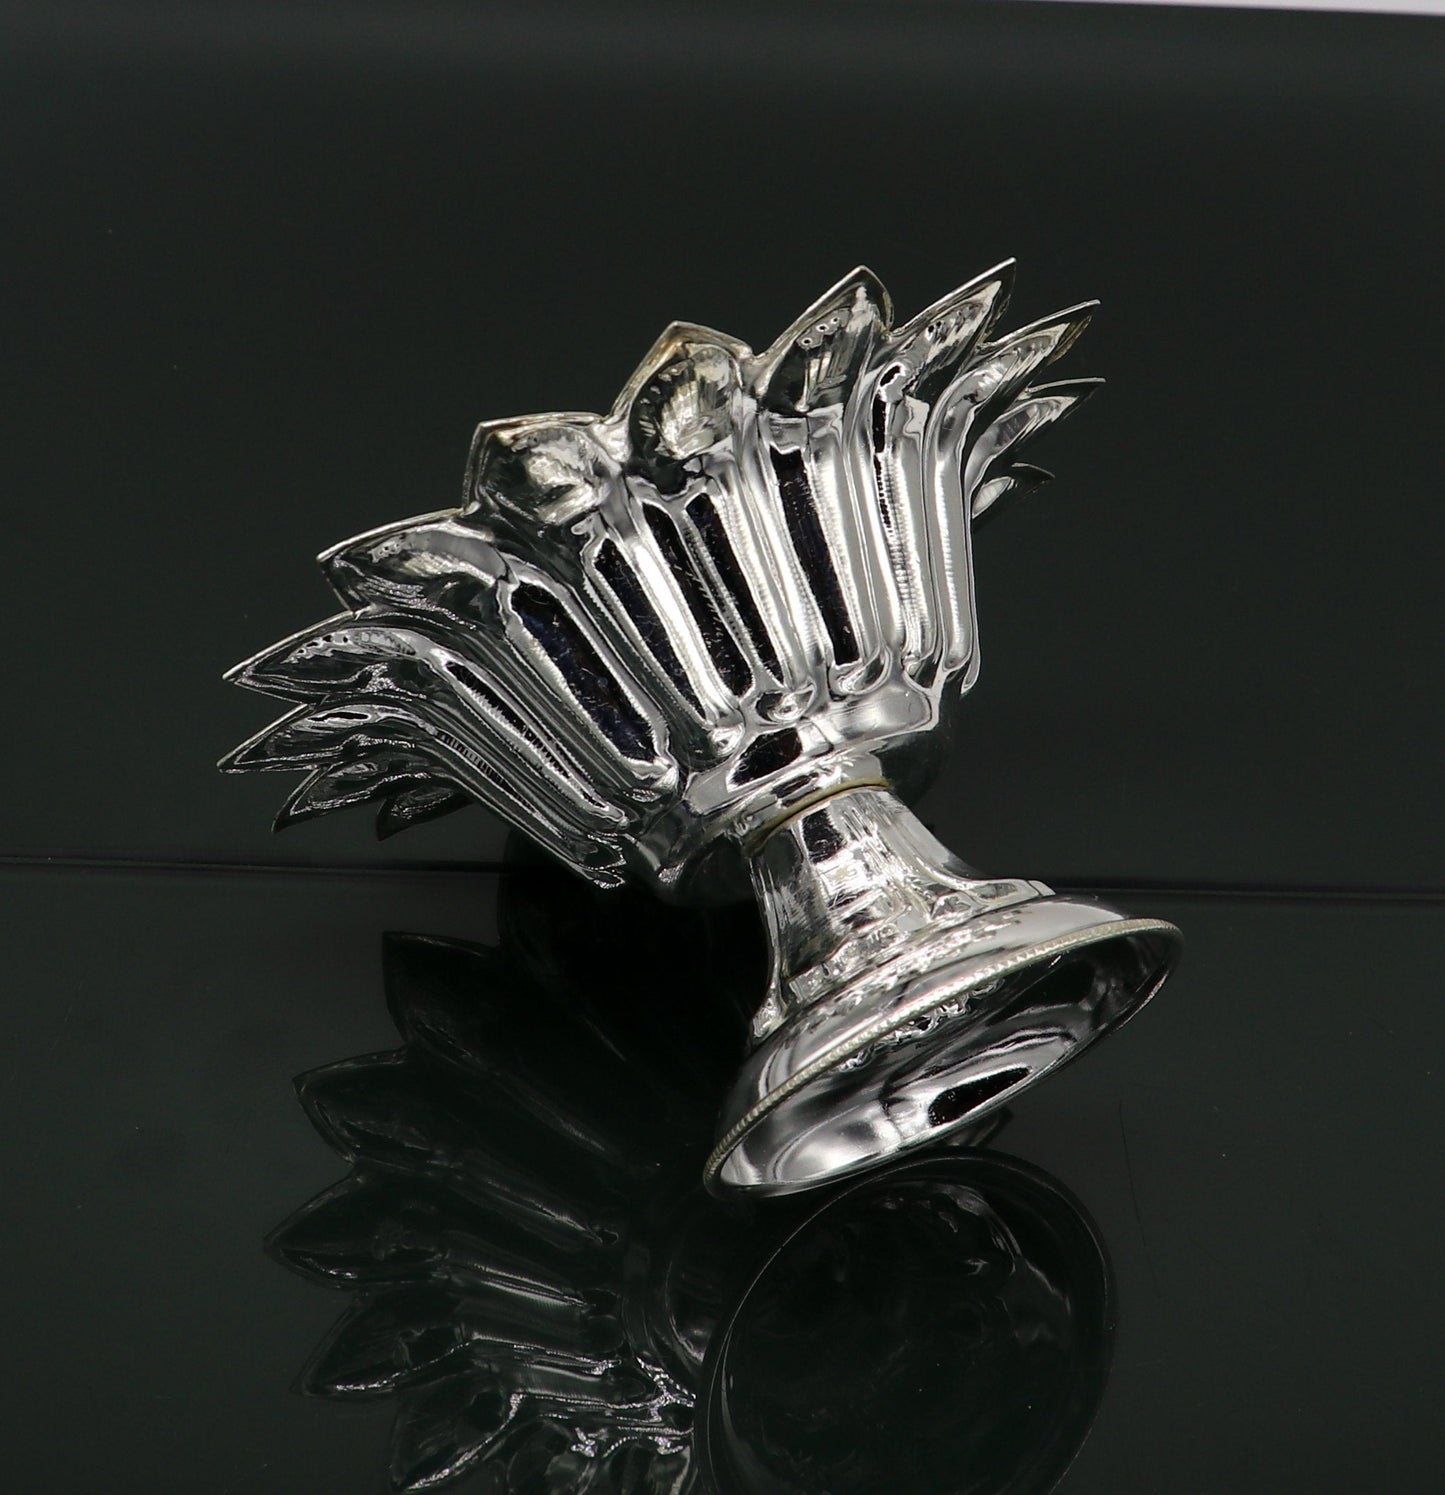 999 pure silver handmade elegant oil lamp, silver home temple utensils, silver diya, deepak, silver vessels, silver art decorative art su172 - TRIBAL ORNAMENTS